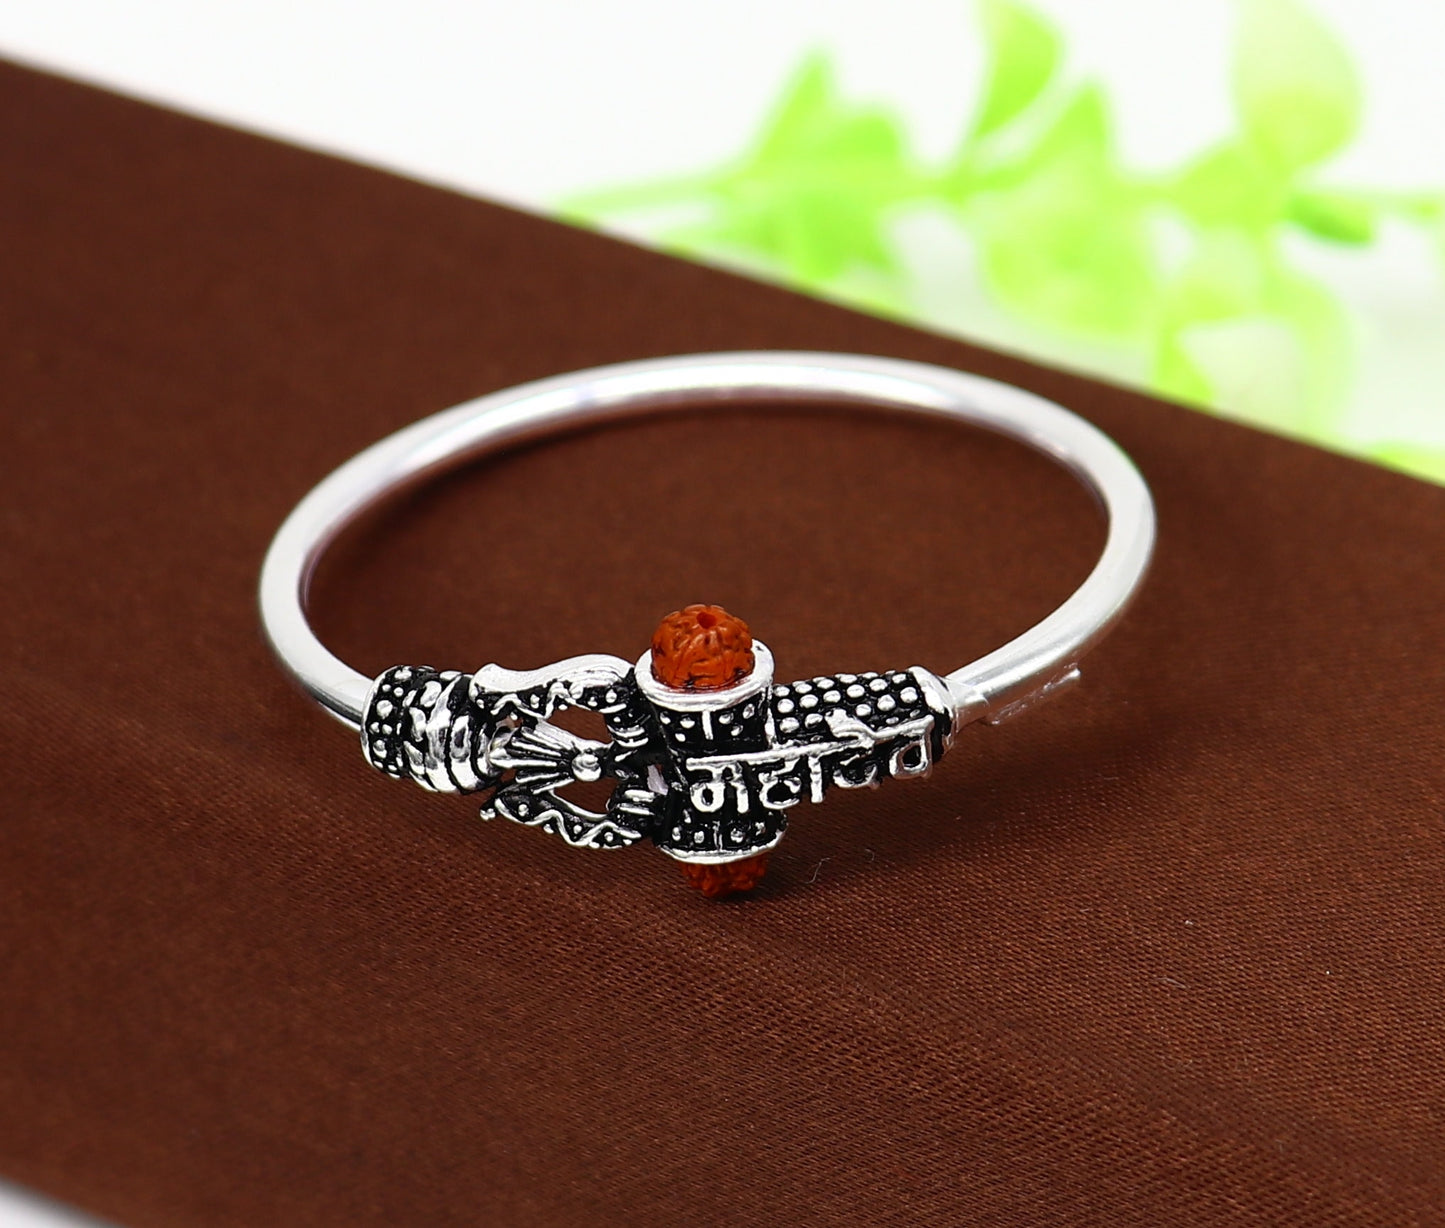 Handmade vintage design sterling silver baby/kids bangle kada, excellent lord shiva Mahadeva bangle bracelet Bahubali kada gifting nbbk239 - TRIBAL ORNAMENTS